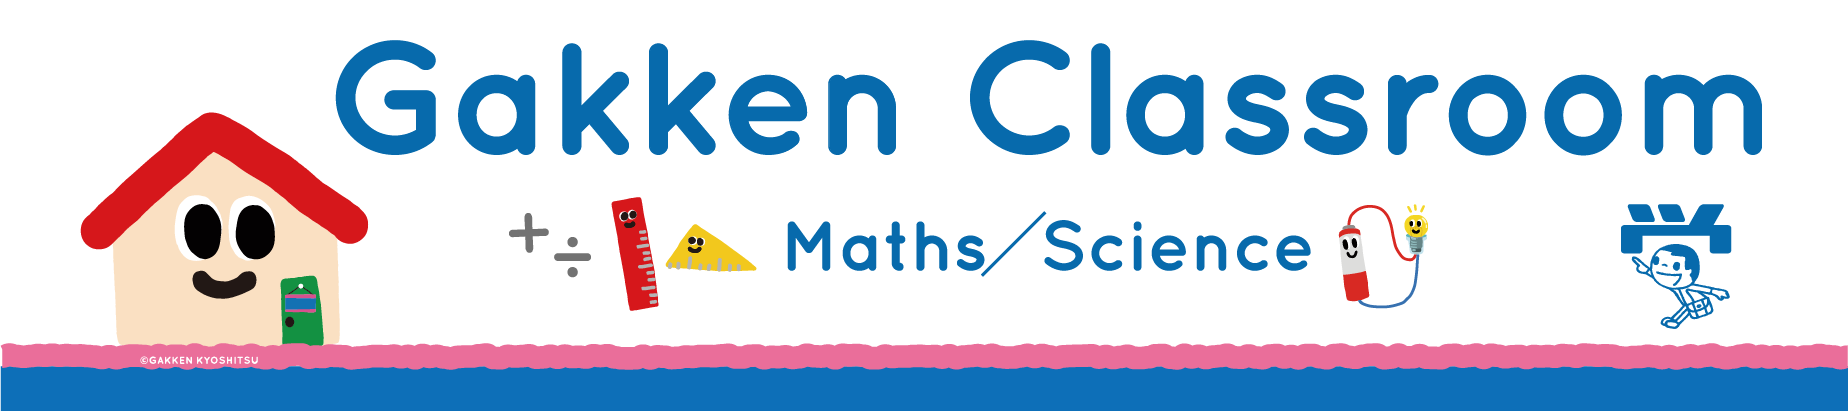 Gakken Classroom Logo